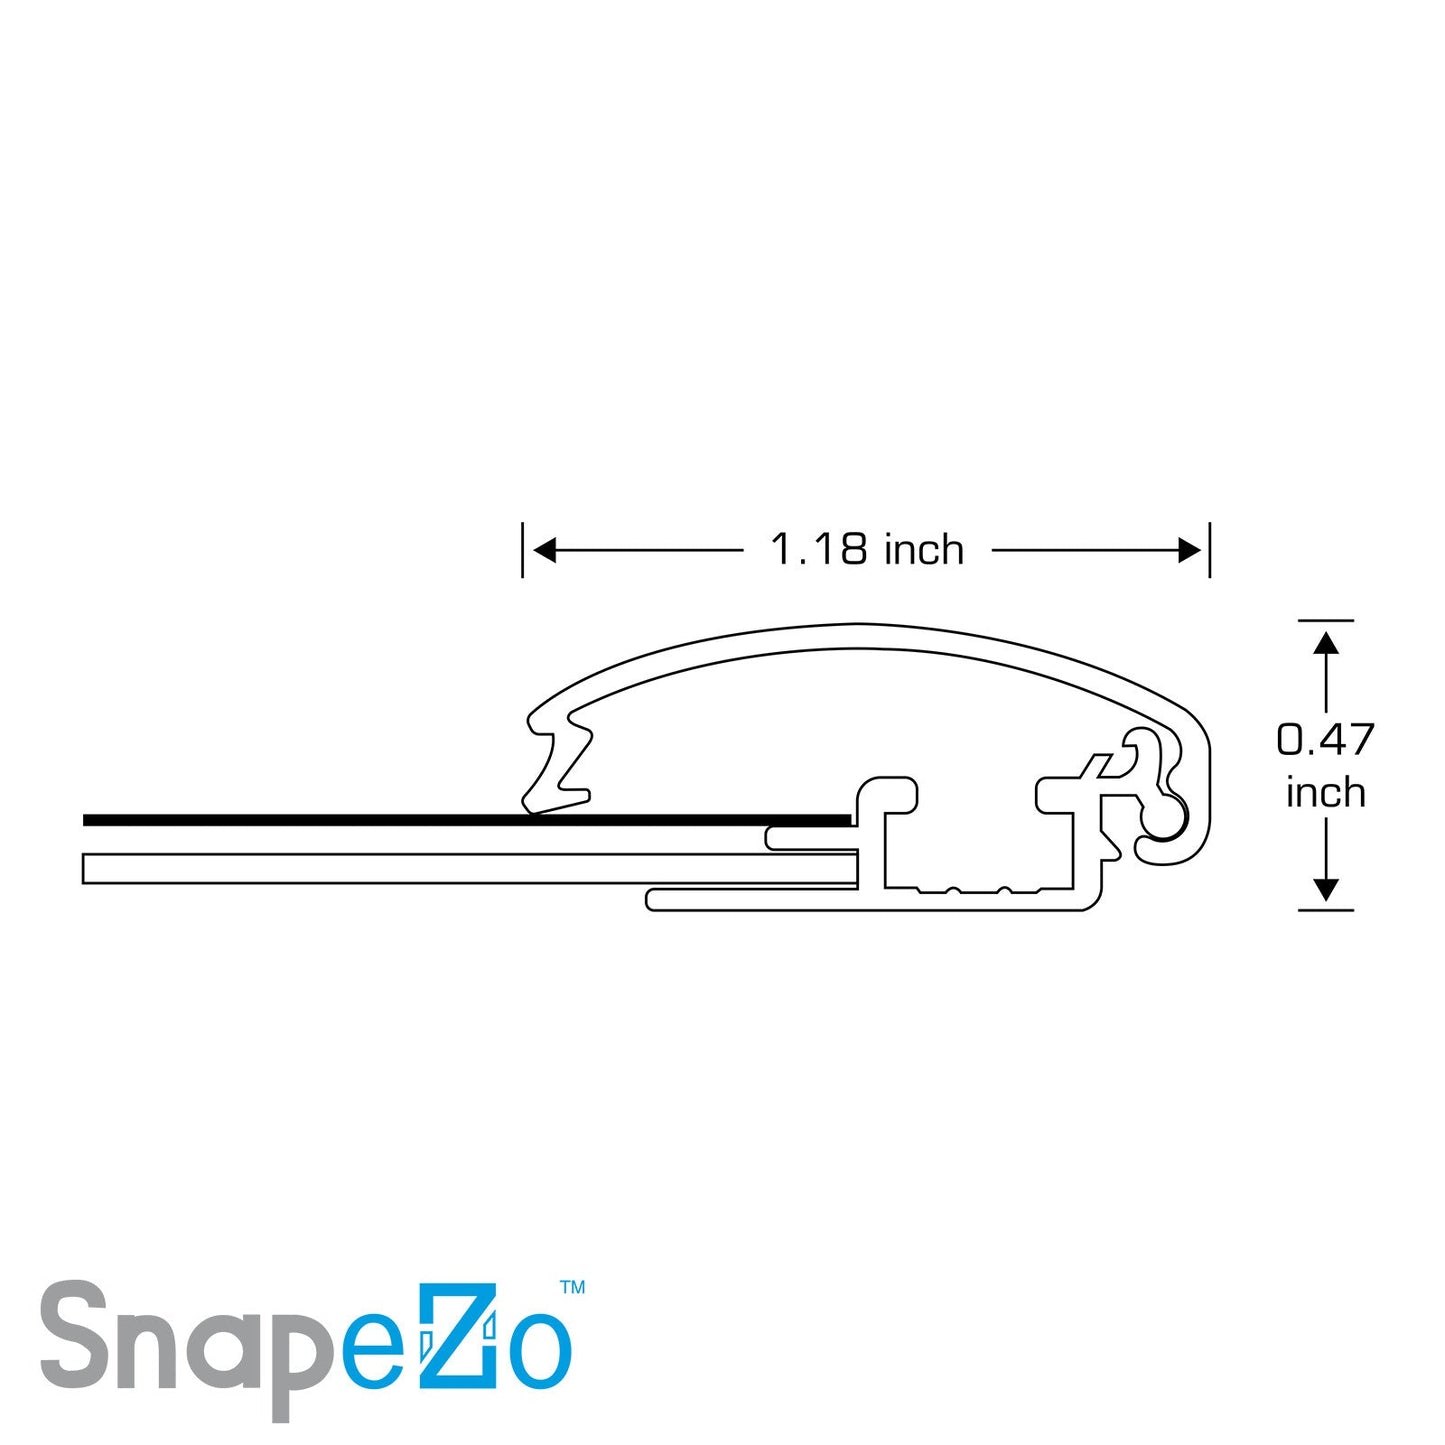 15x20 Silver SnapeZo® Snap Frame - 1.2" Profile